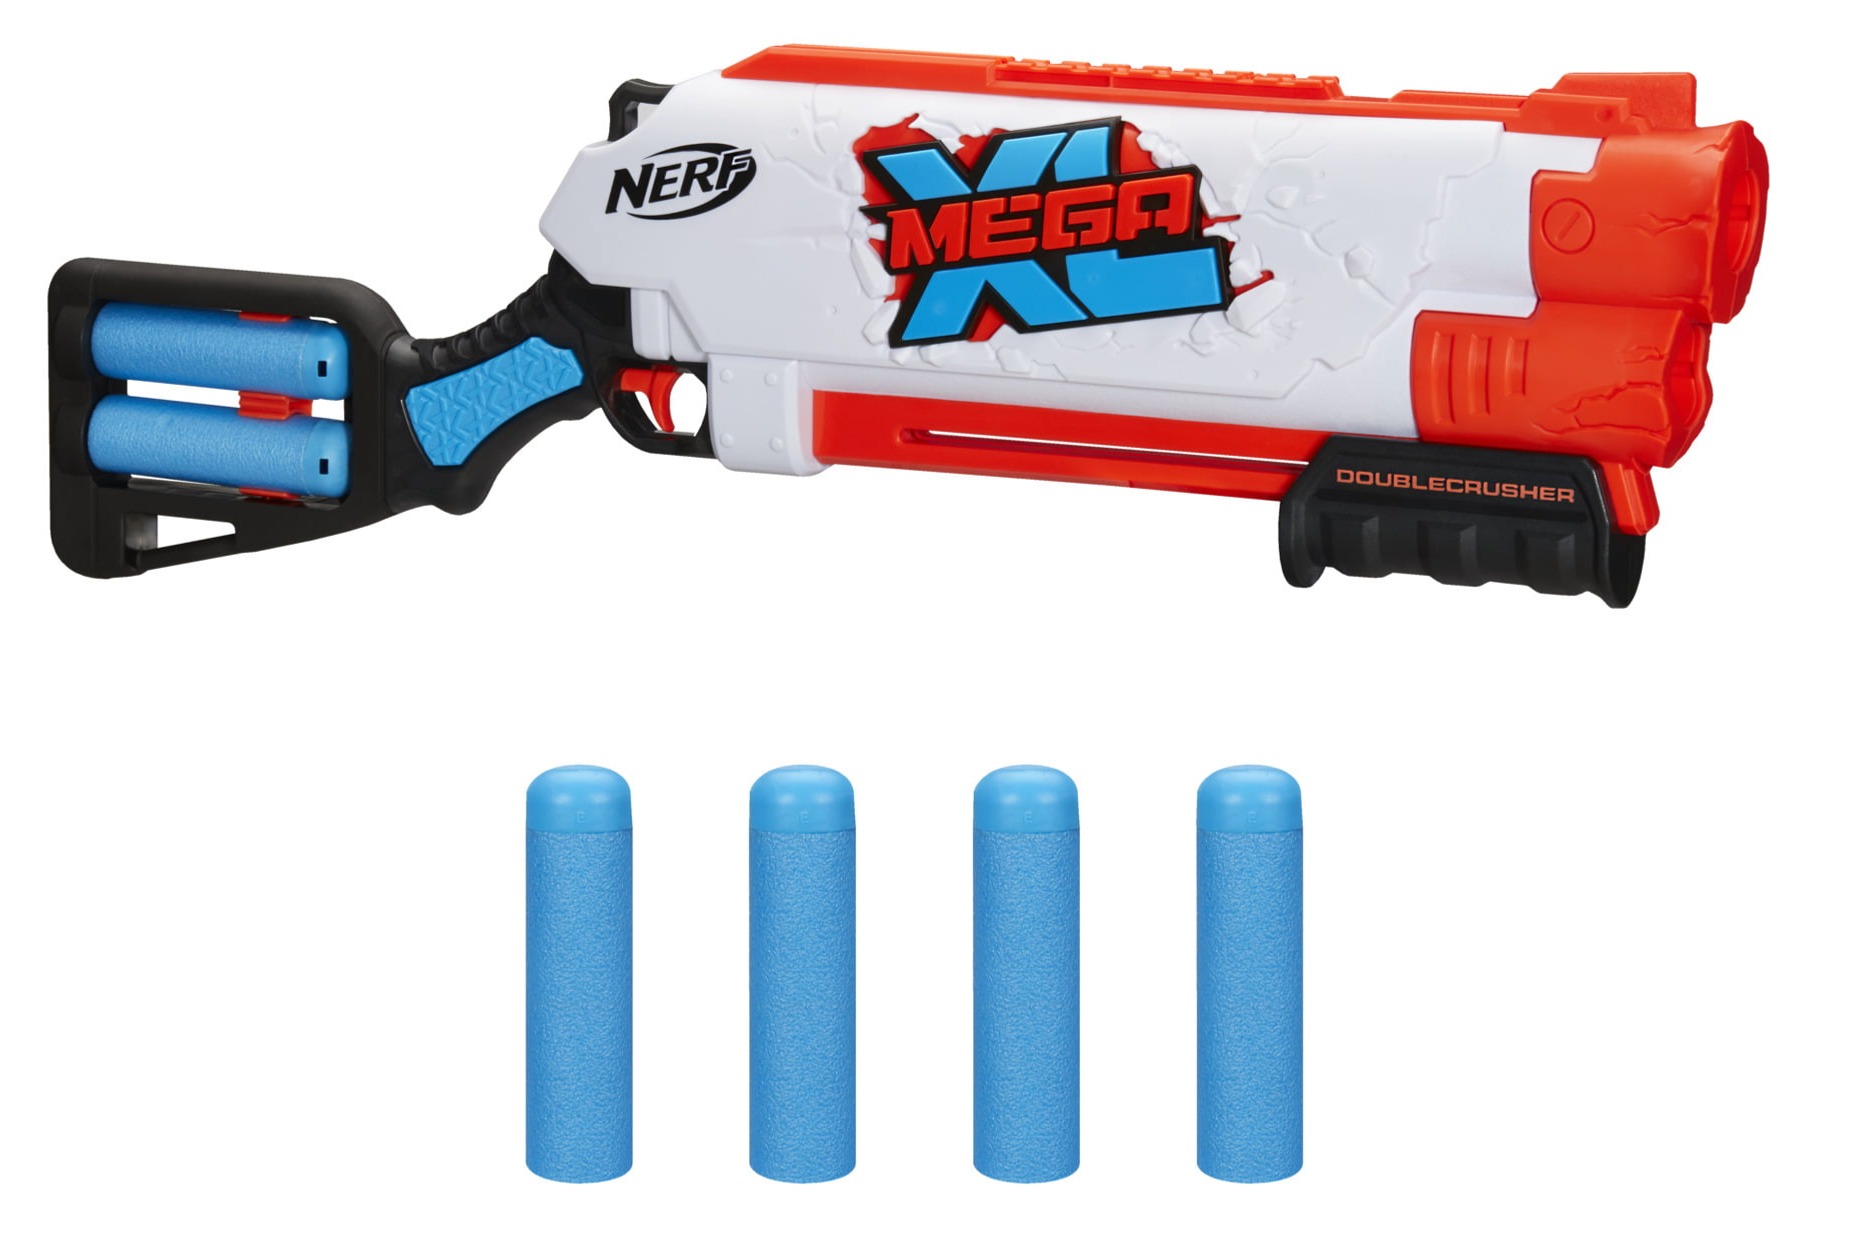 Nerf Mega XL Double Crusher Blaster $9.97 + Free Shipping w/ Walmart+ or Orders $35+